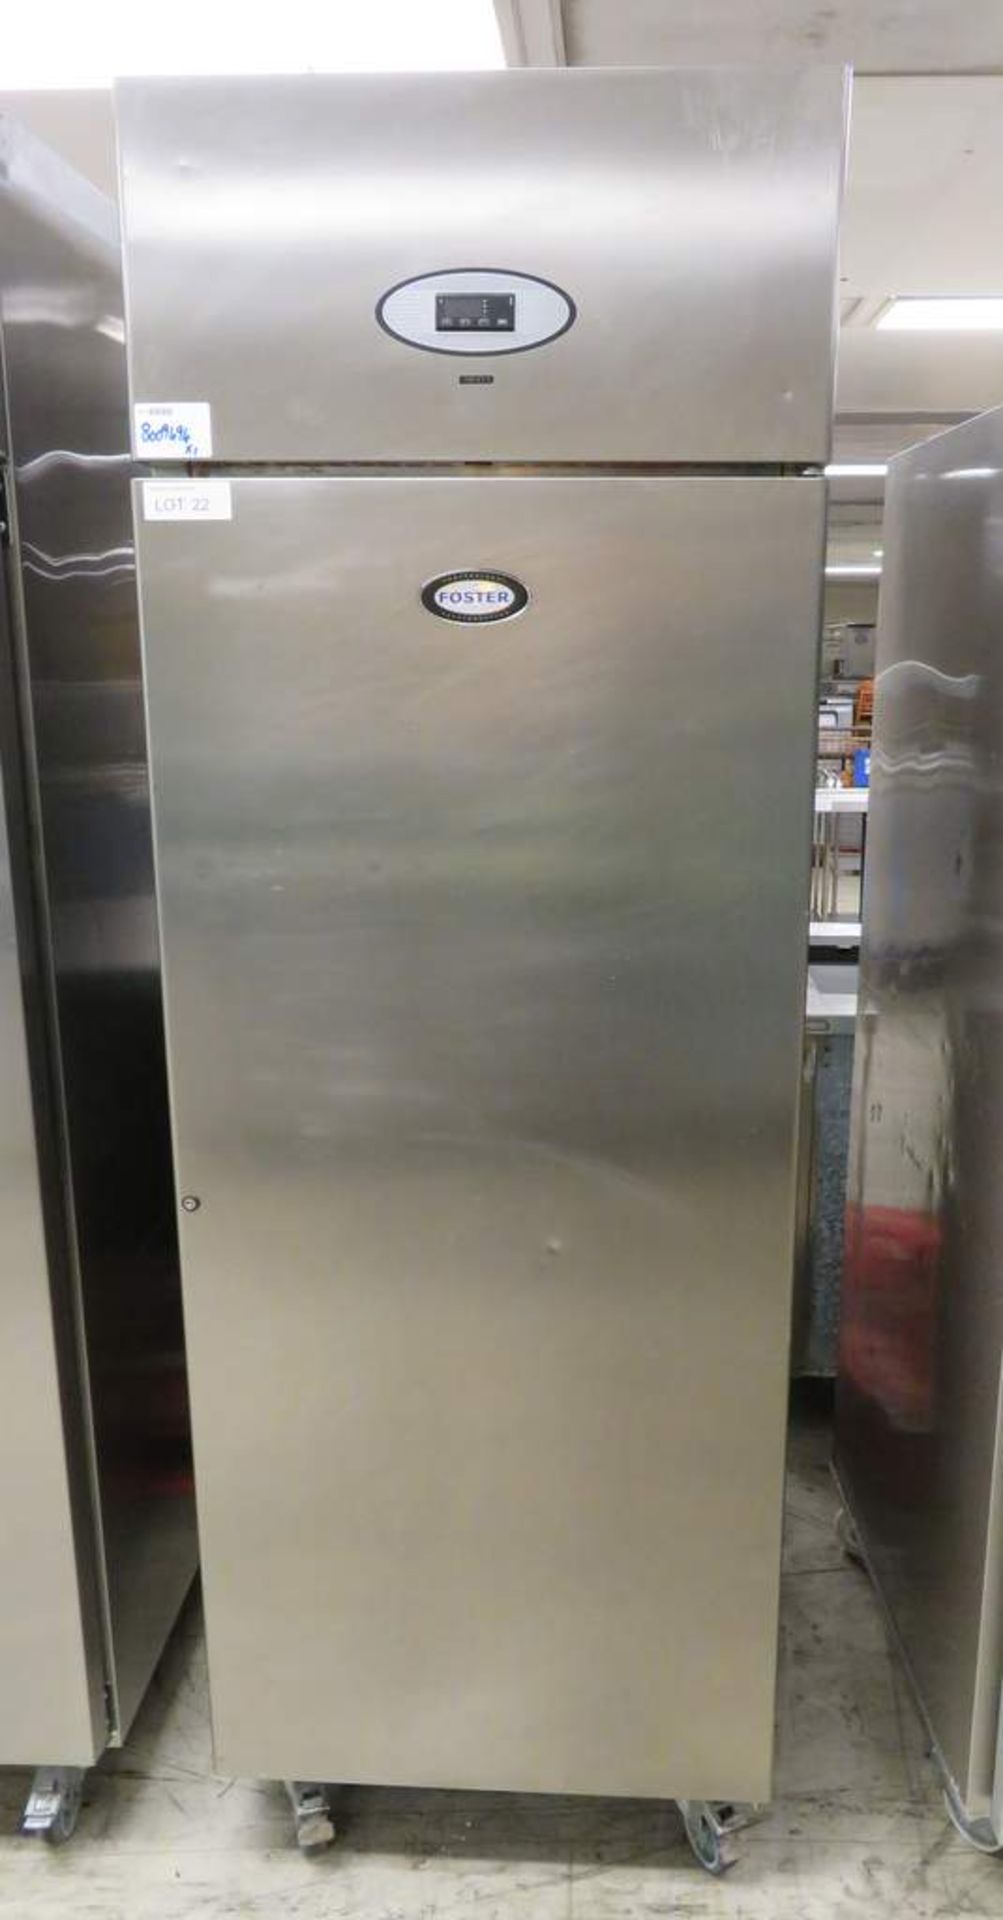 Foster PSG600LA stainless steel freezer - E5186336